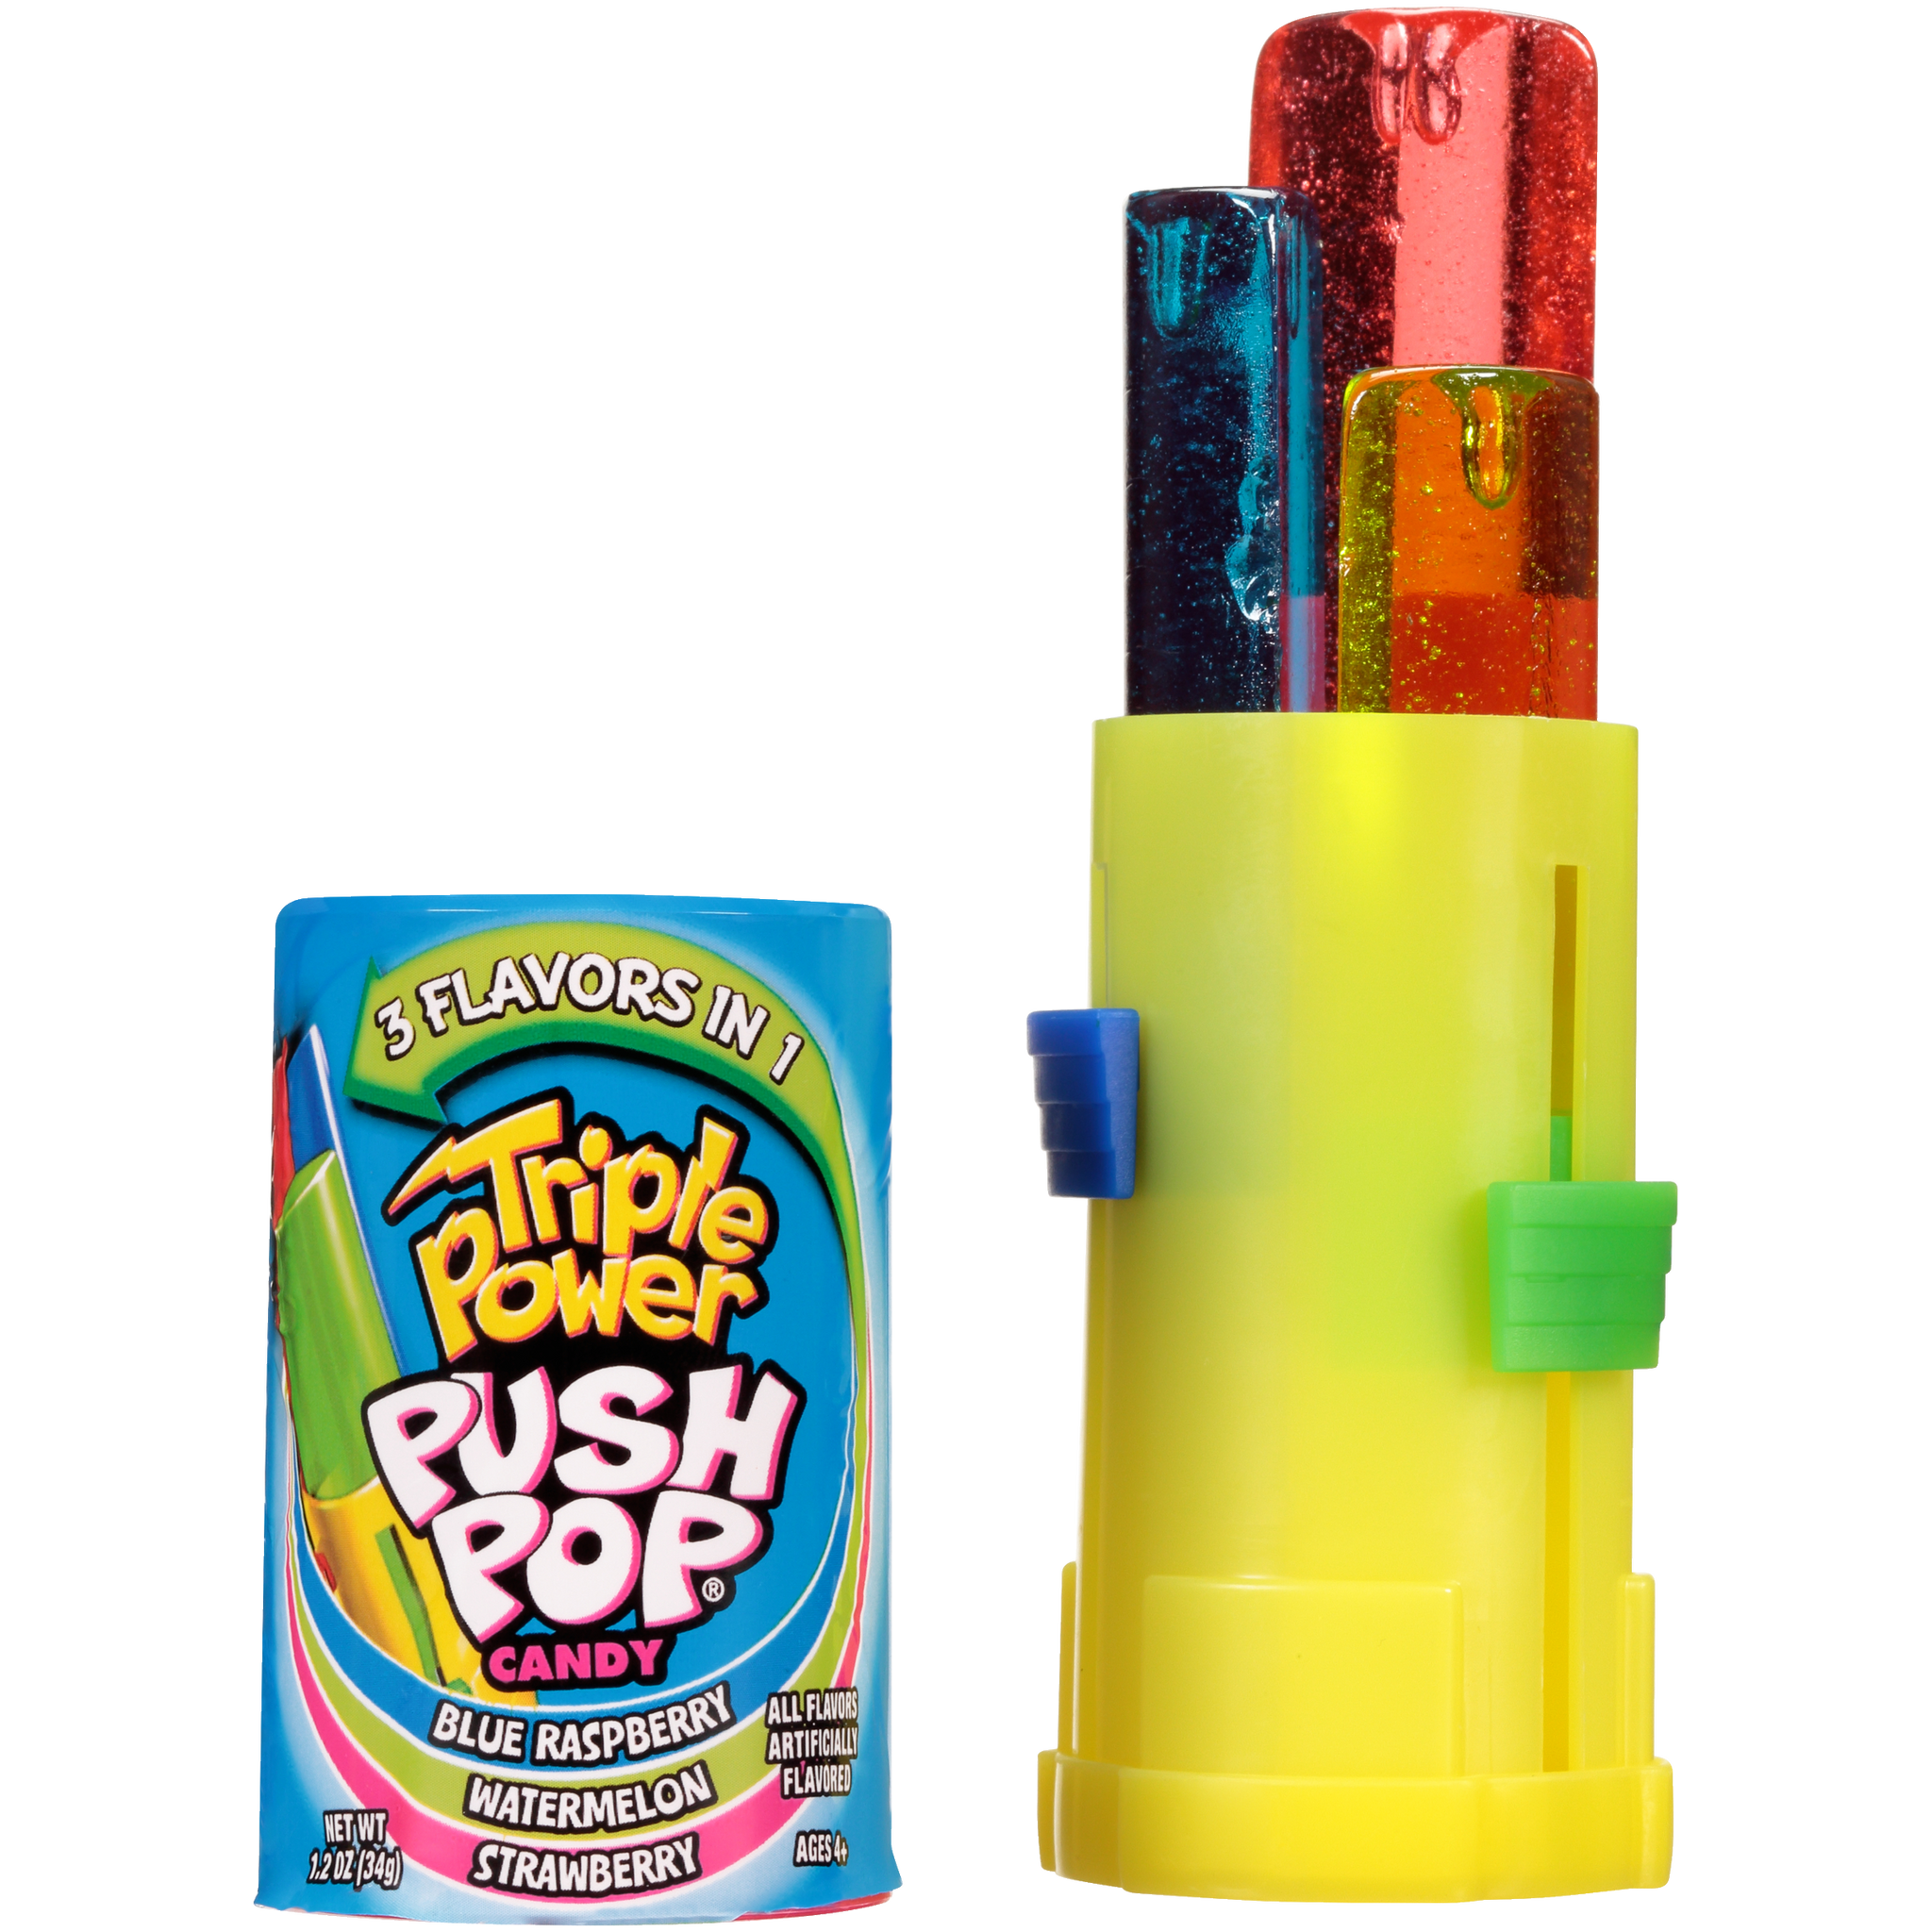 Skyldfølelse Lære udenad udpege Triple Power Push Pop Candy 1.2 oz. - All City Candy